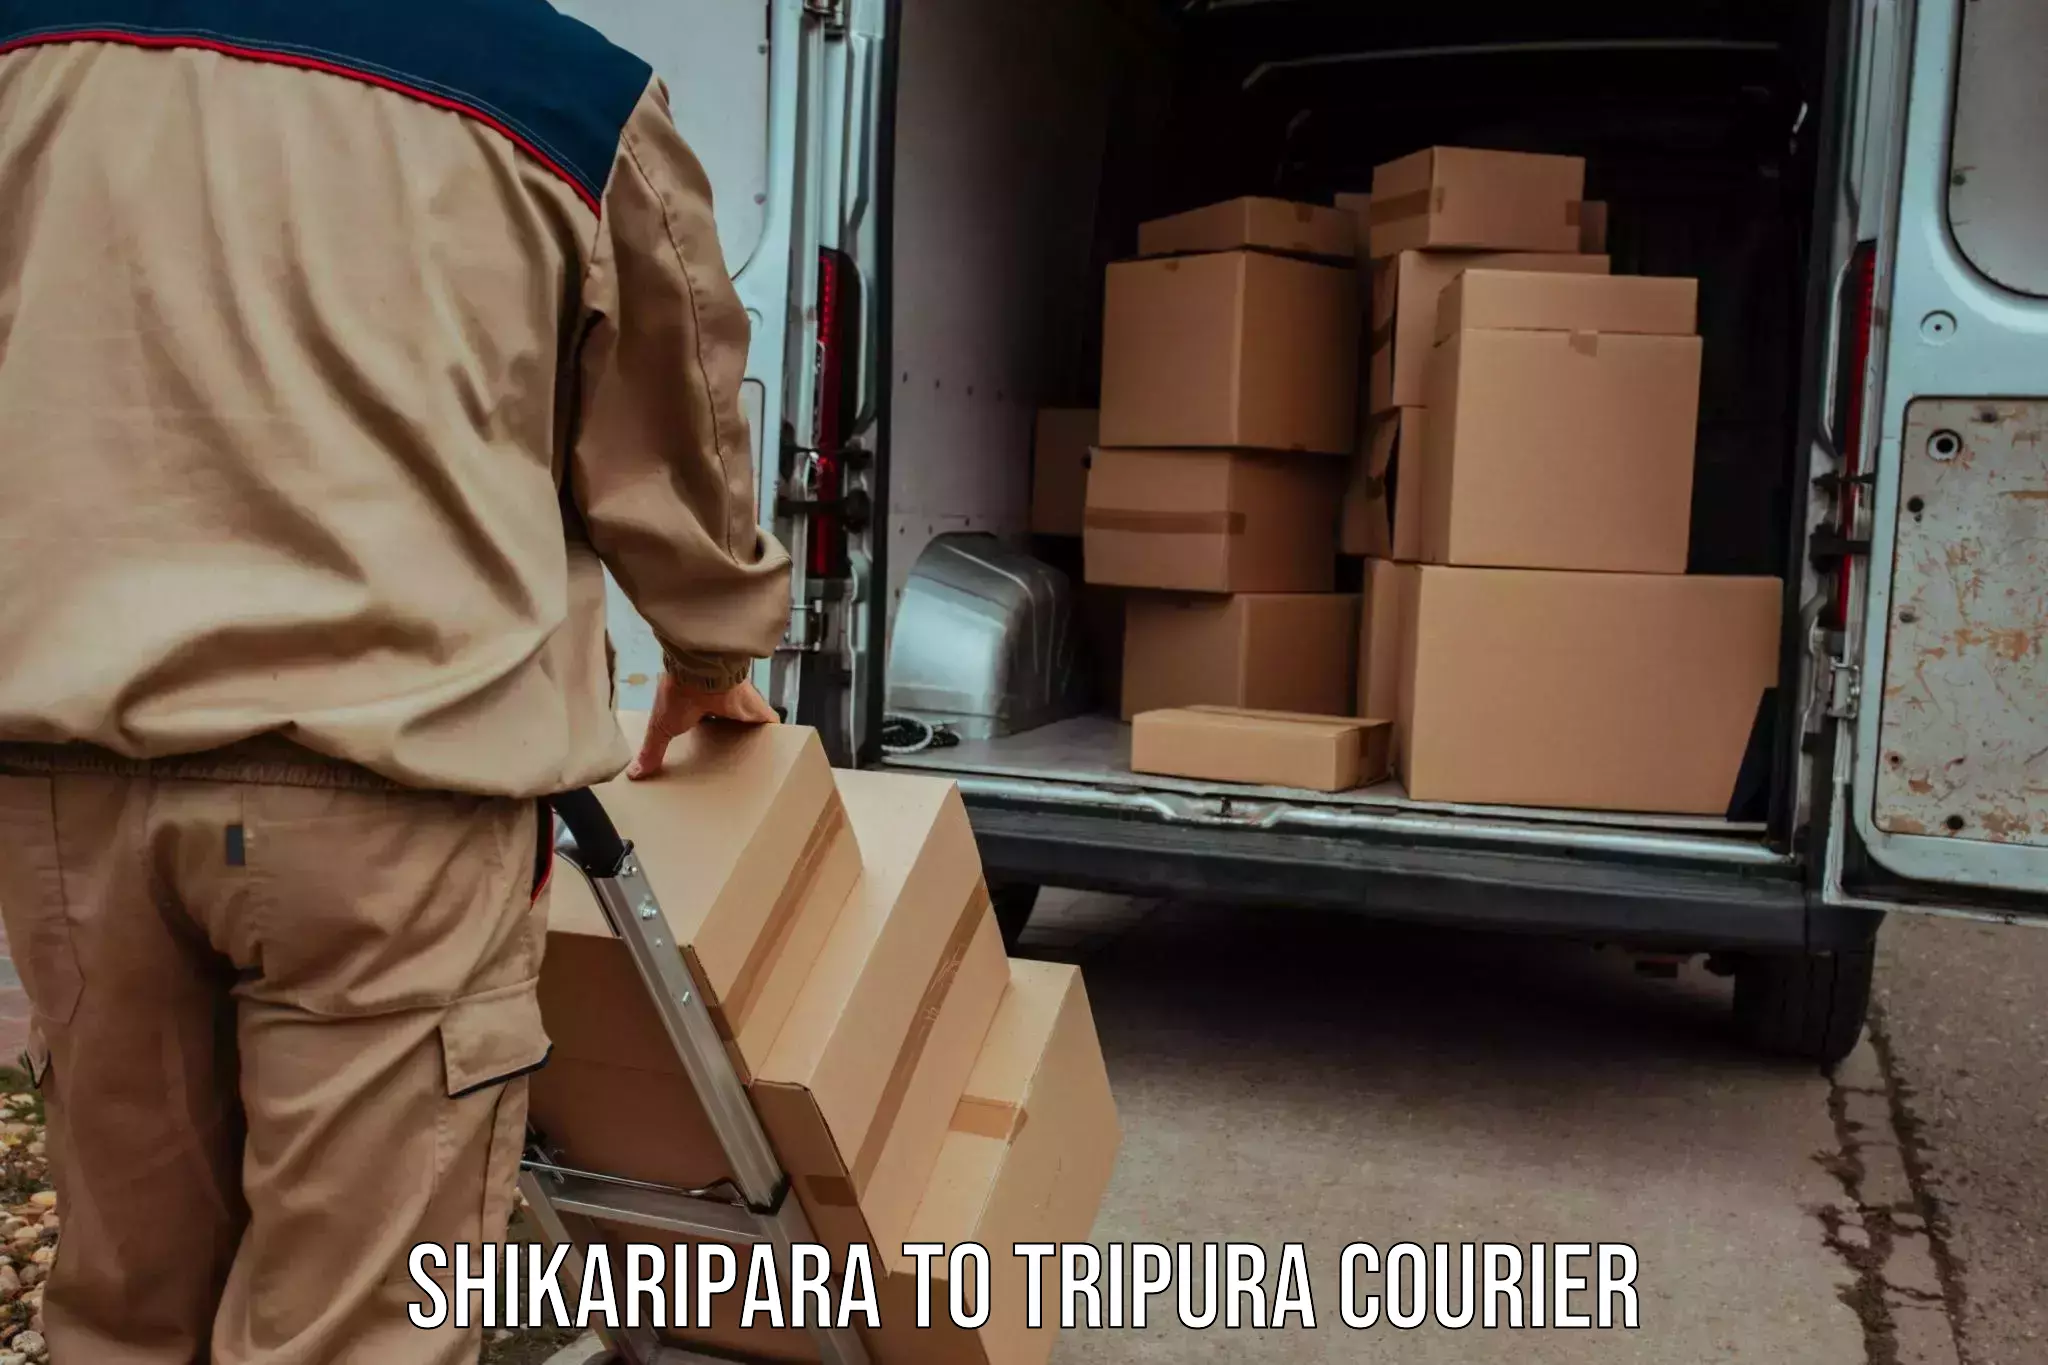 Quick dispatch service Shikaripara to Tripura